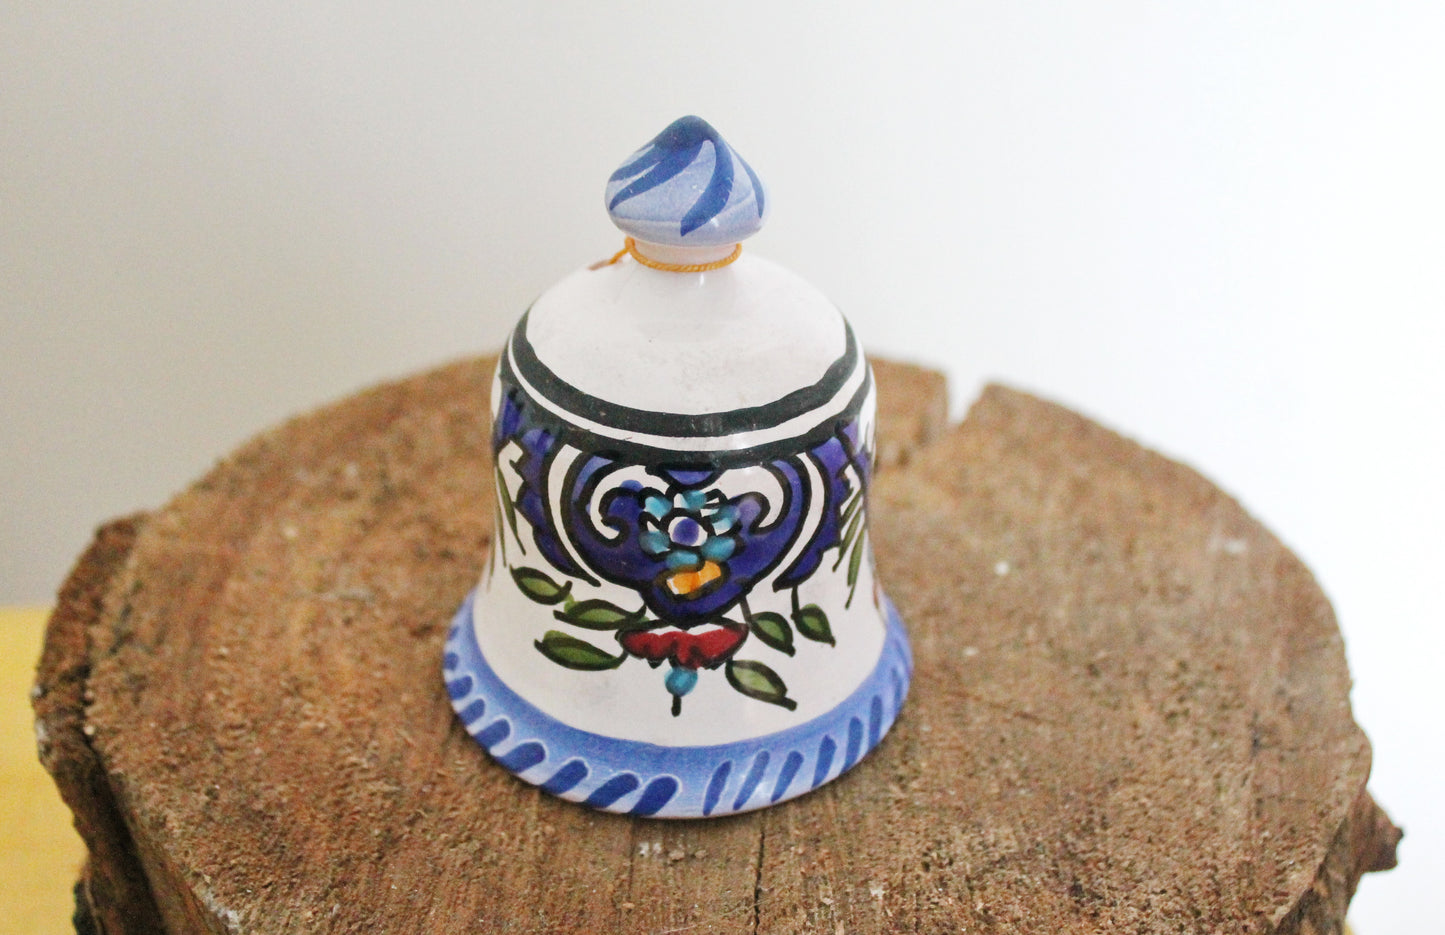 Vintage beautiful ceramic Bell - 3.8 inches - Vintage Souvenir - Germany porcelain